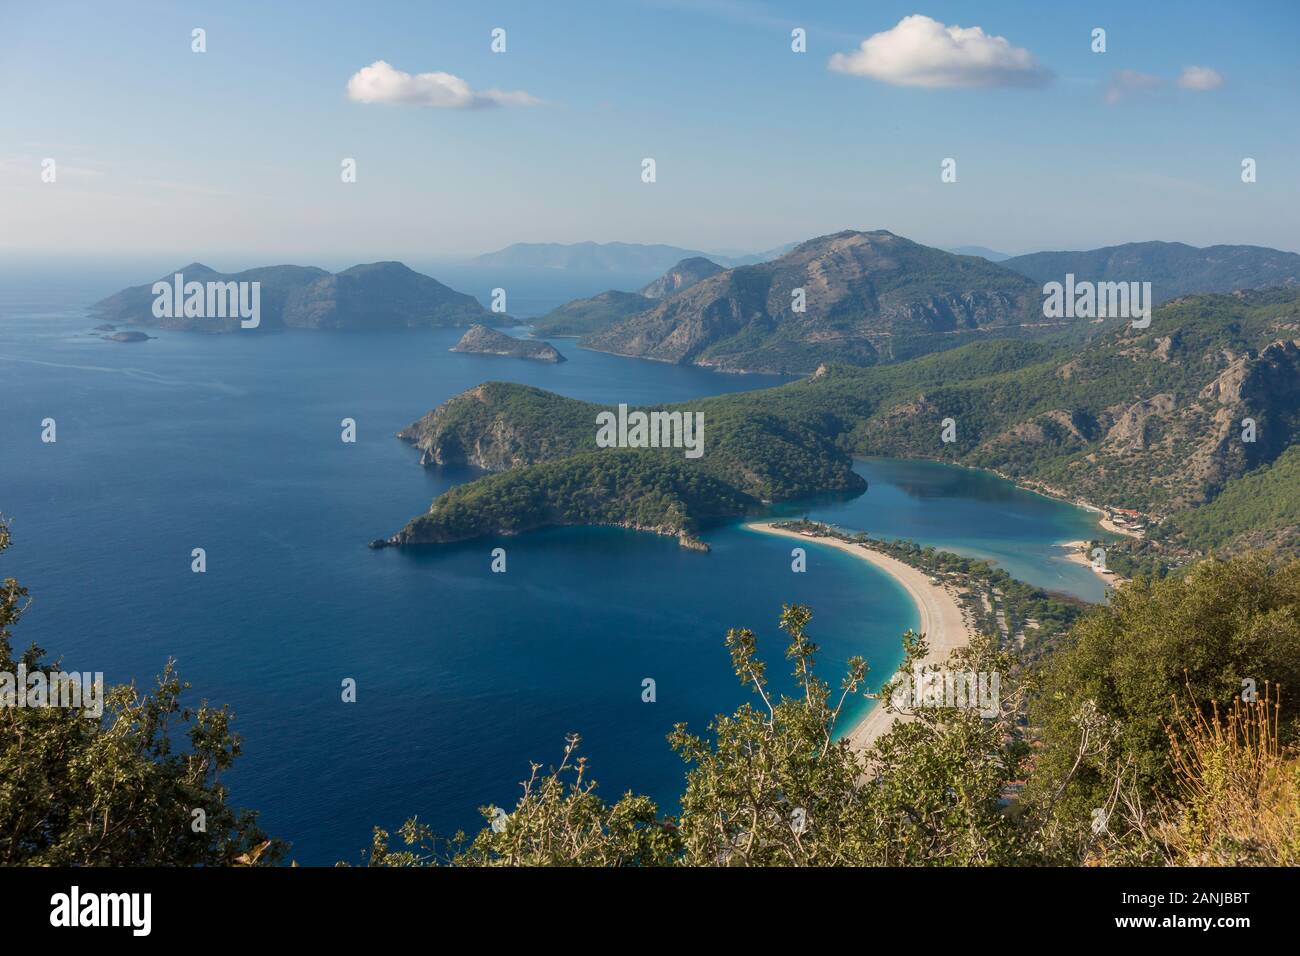 View from the Lycian Way down to Ölüdeniz Blue Lagoon and Belcekiz Beach, Fethiye, Aegean Turquoise coast, Anatolia, Turkey, Asia Minor, Eurasia Stock Photo